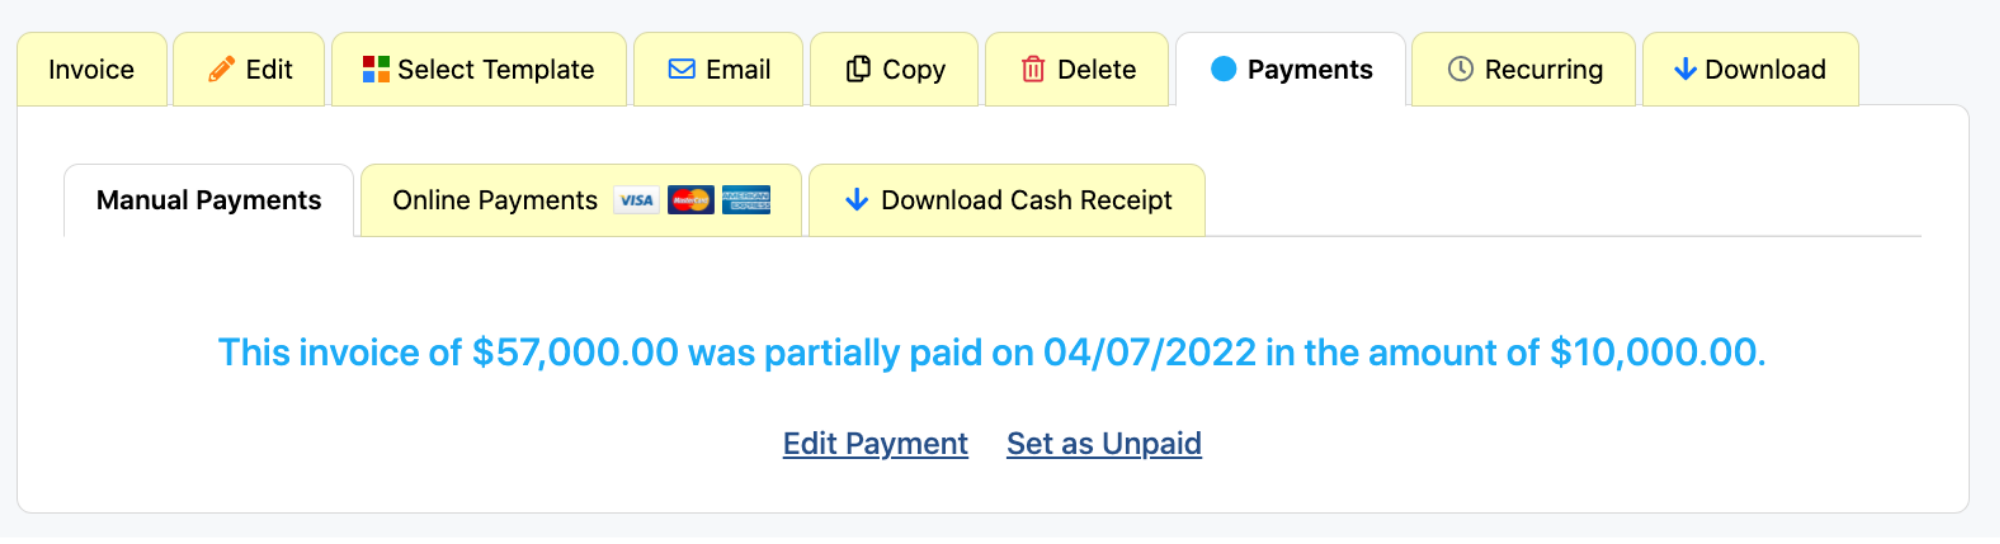 partial payment shown